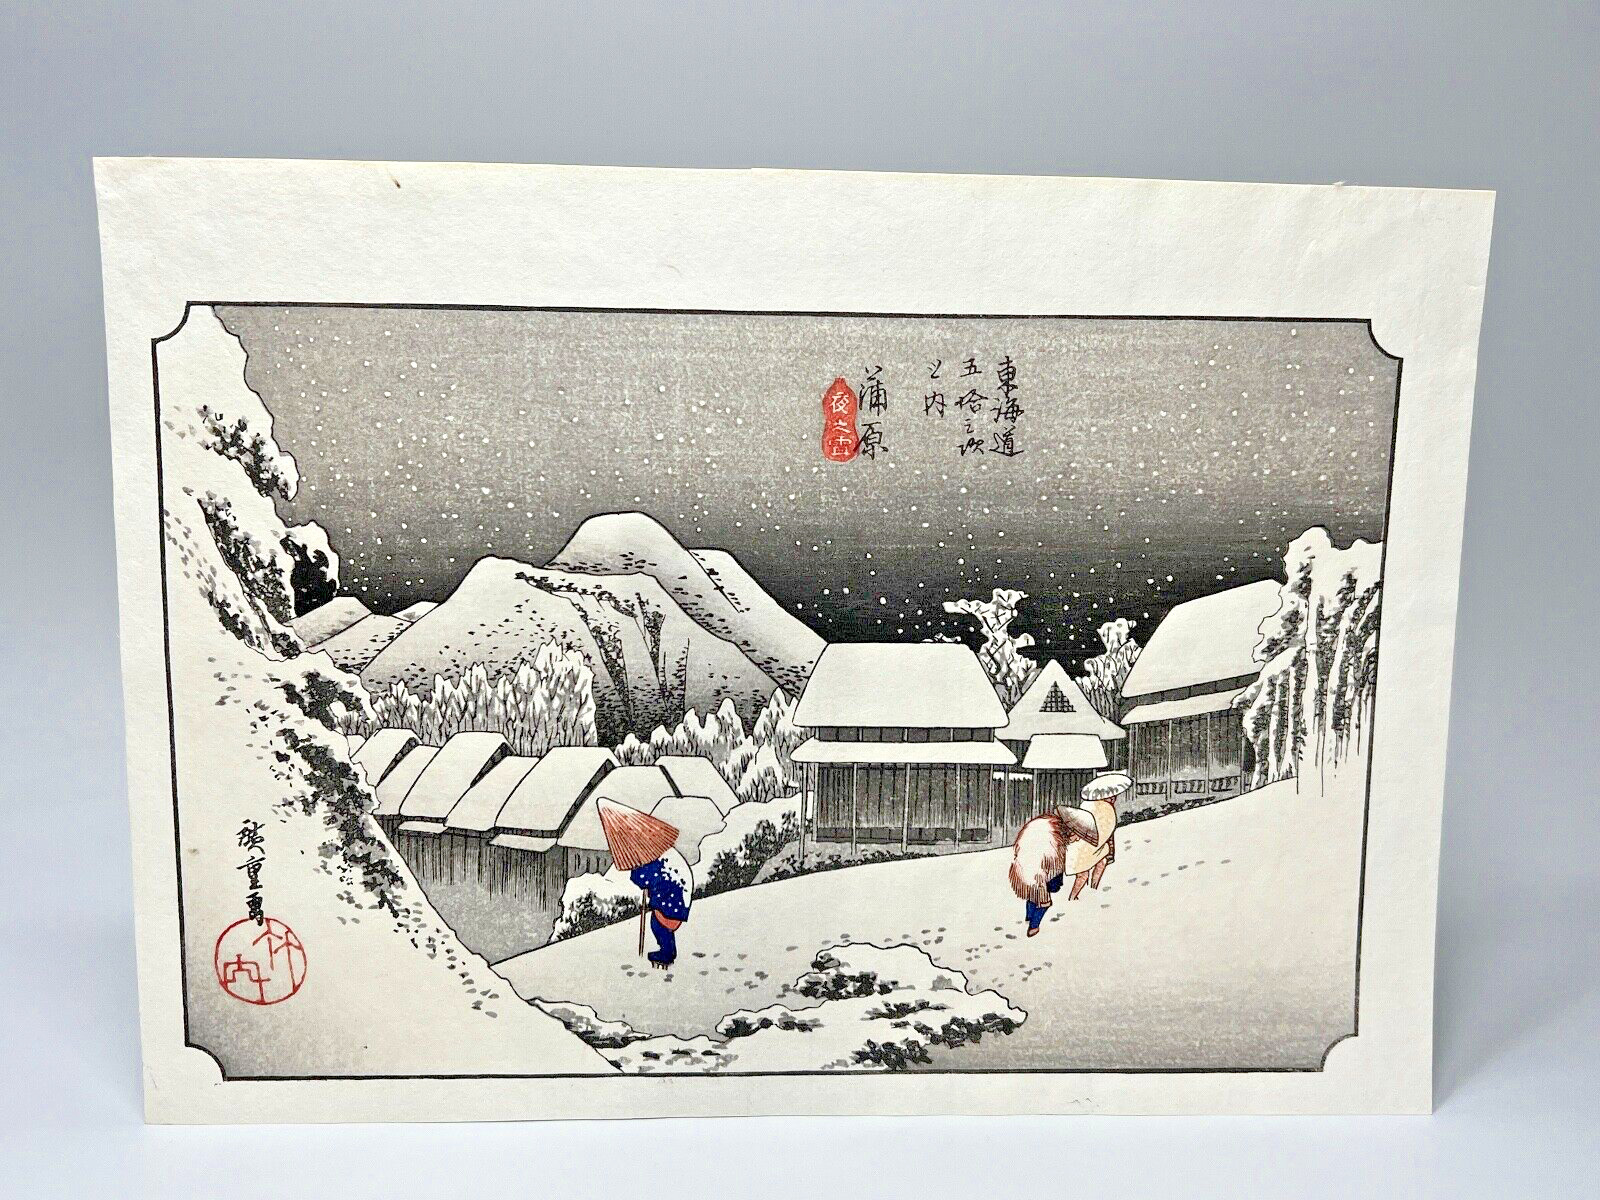 Japan Woodblock Print 53 Stations Tokaido Kanbara Evening Snow Hiroshige Utagawa